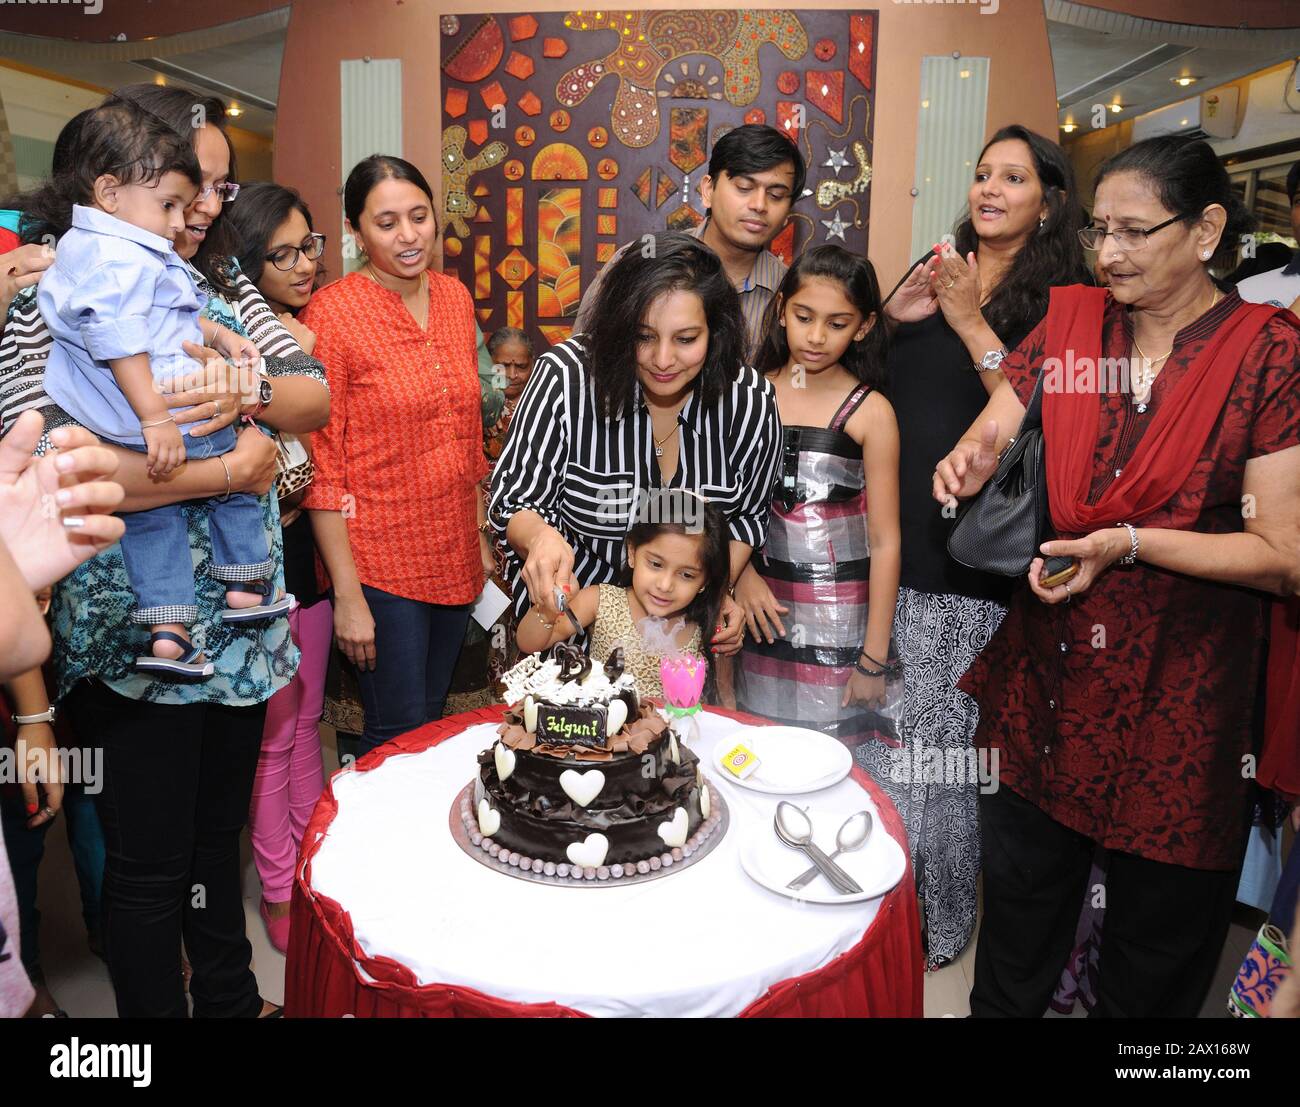 Mumbai, Maharashtra, India- Asia, March. 04, 2016 - Group Indian Family and friends celebrating birthday party Stock Photo